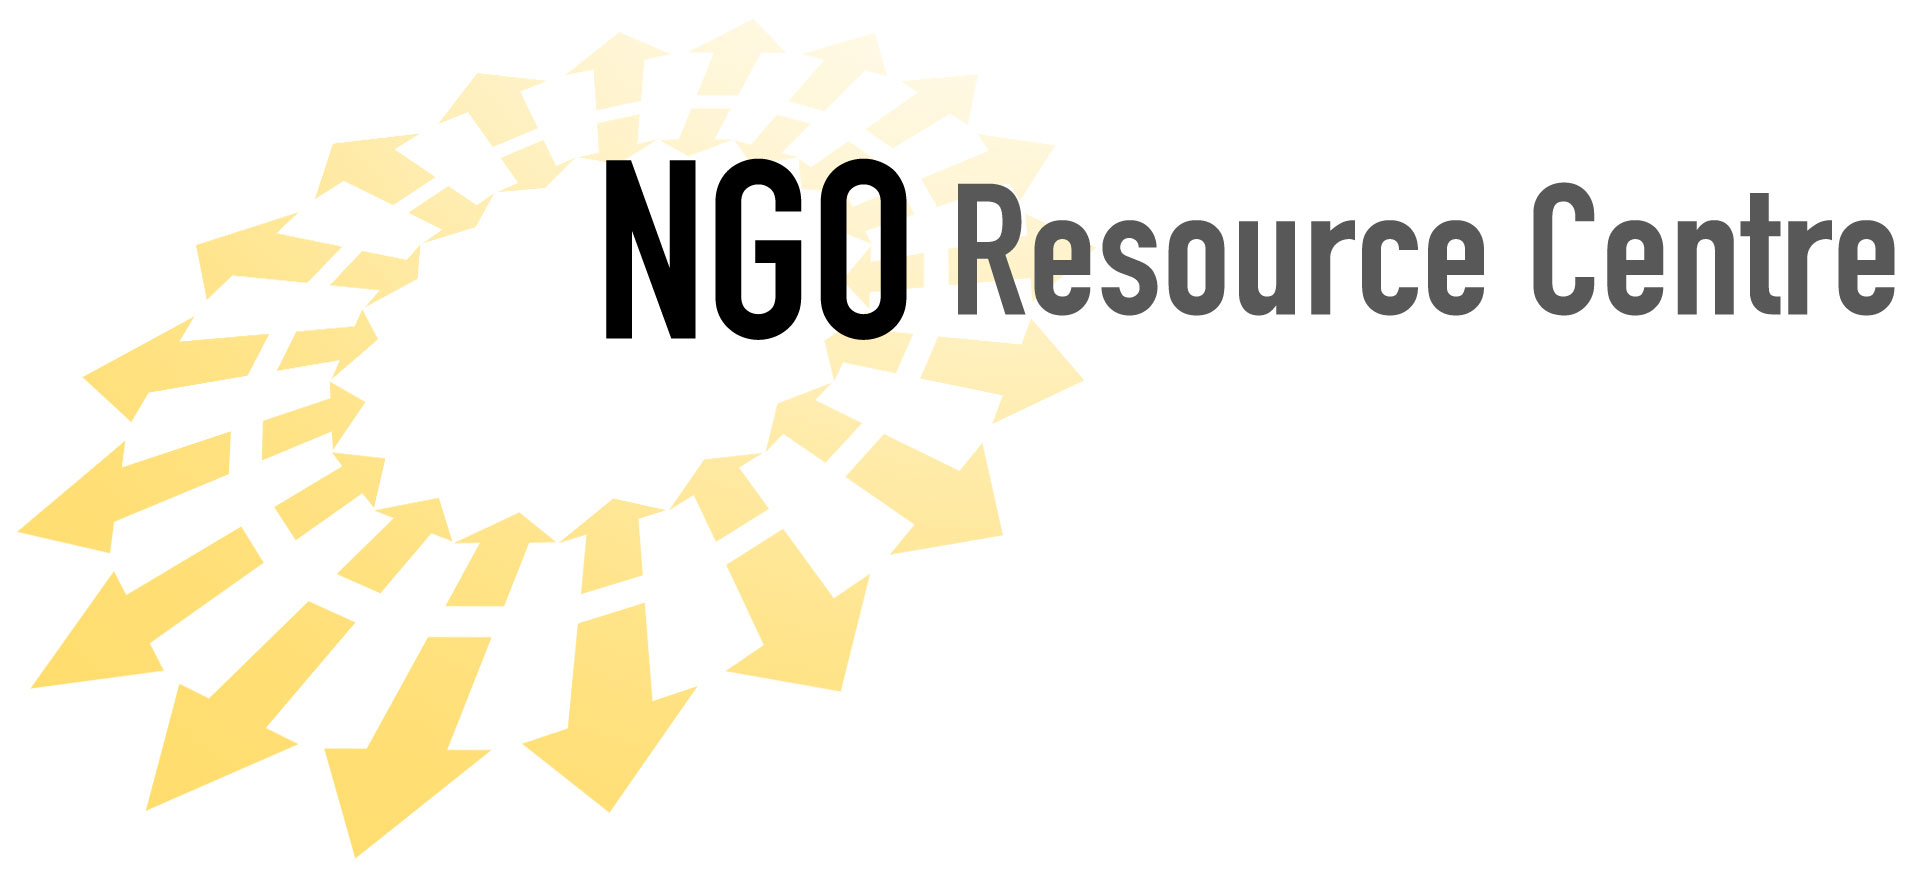 NGO Resource Centre Logo